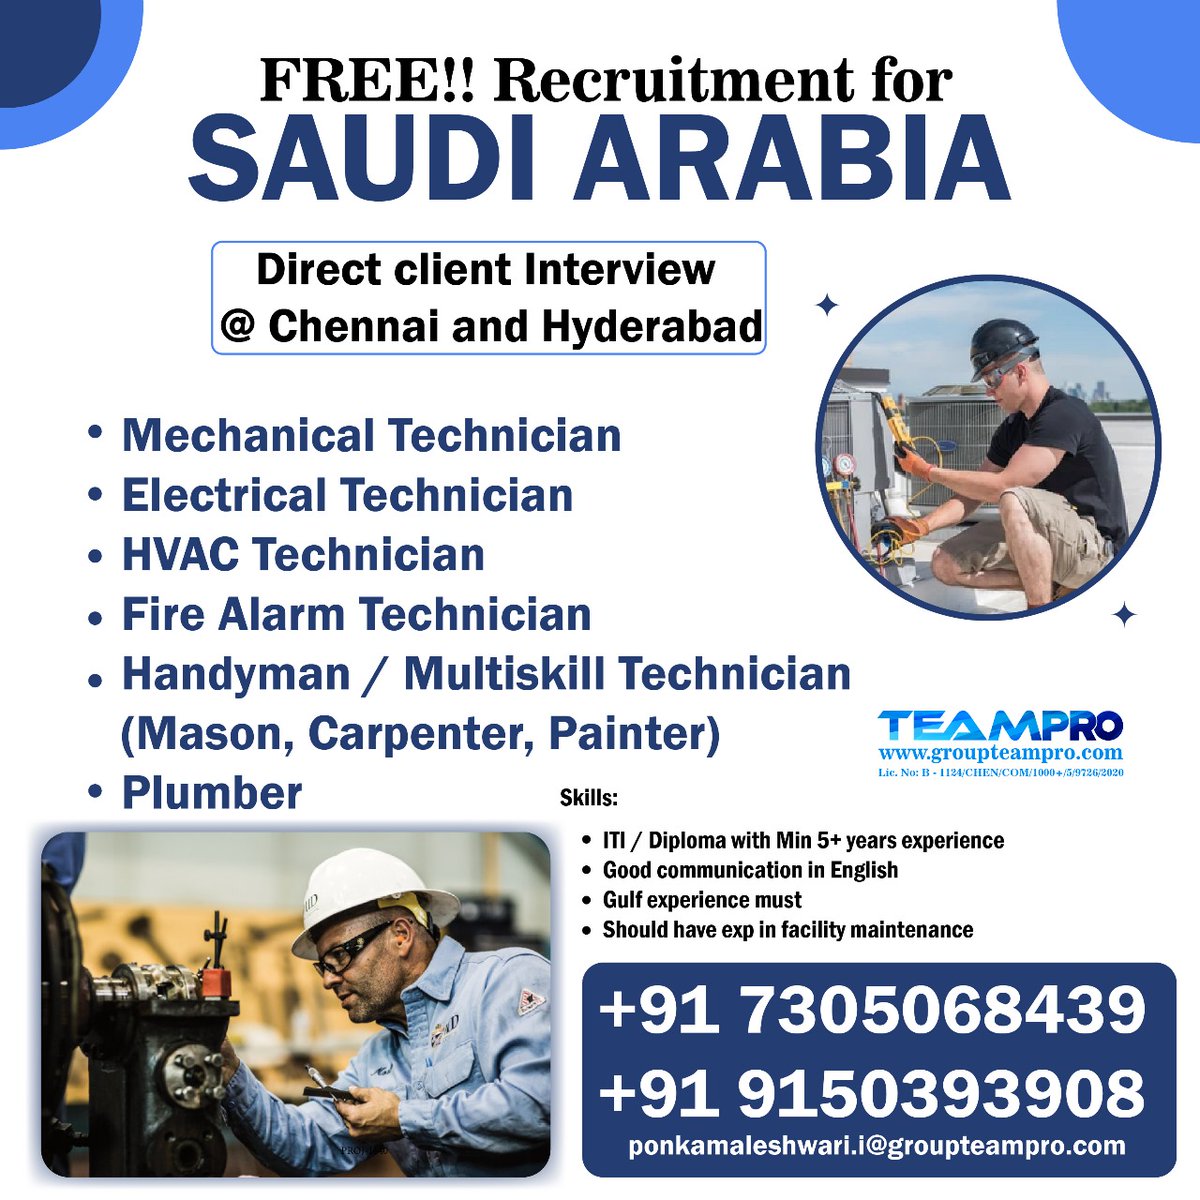 #freerecruitment #saudijobs #saudijobseekers #technician #electrical #mechanical #firealarm #plumber #handyman #facilitymaintenance #immediatejoiners #shortlistingunderprogress #directinterview